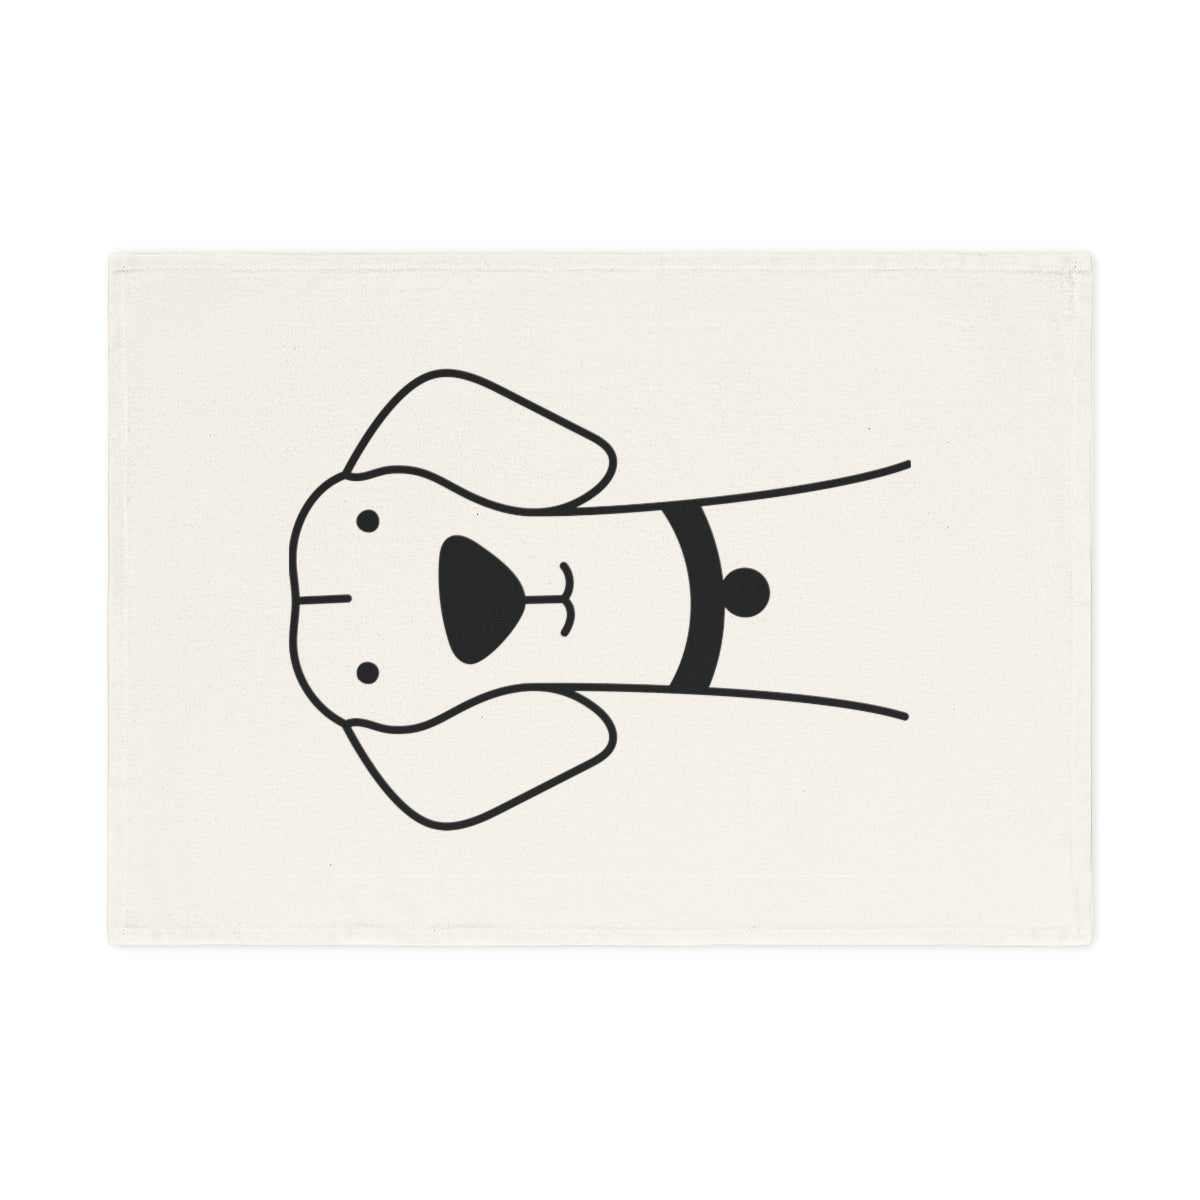 Vizsla dog Cotton Tea Towel, 50 x 70 cm, organic cotton, eco-friendly dog kitchen towel, bathroom hand towel with puppies